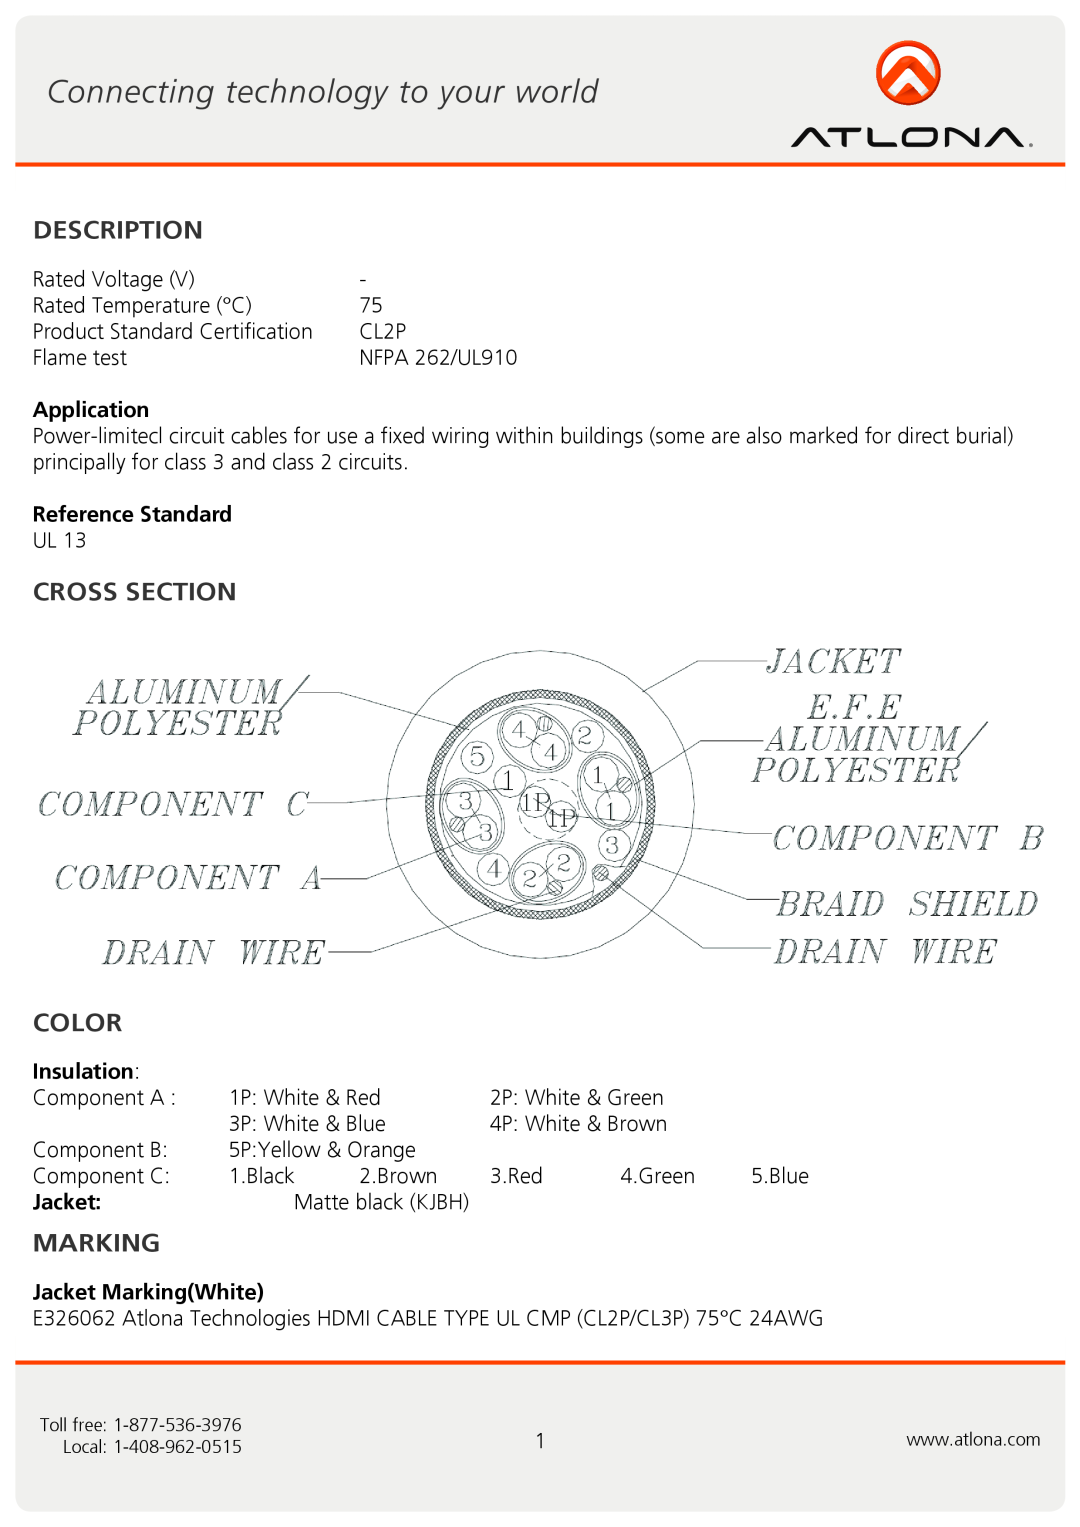 Atlona ATP-14029 user manual Description, Cross Section Color, Marking, Application, Reference Standard, Insulation, Jacket 